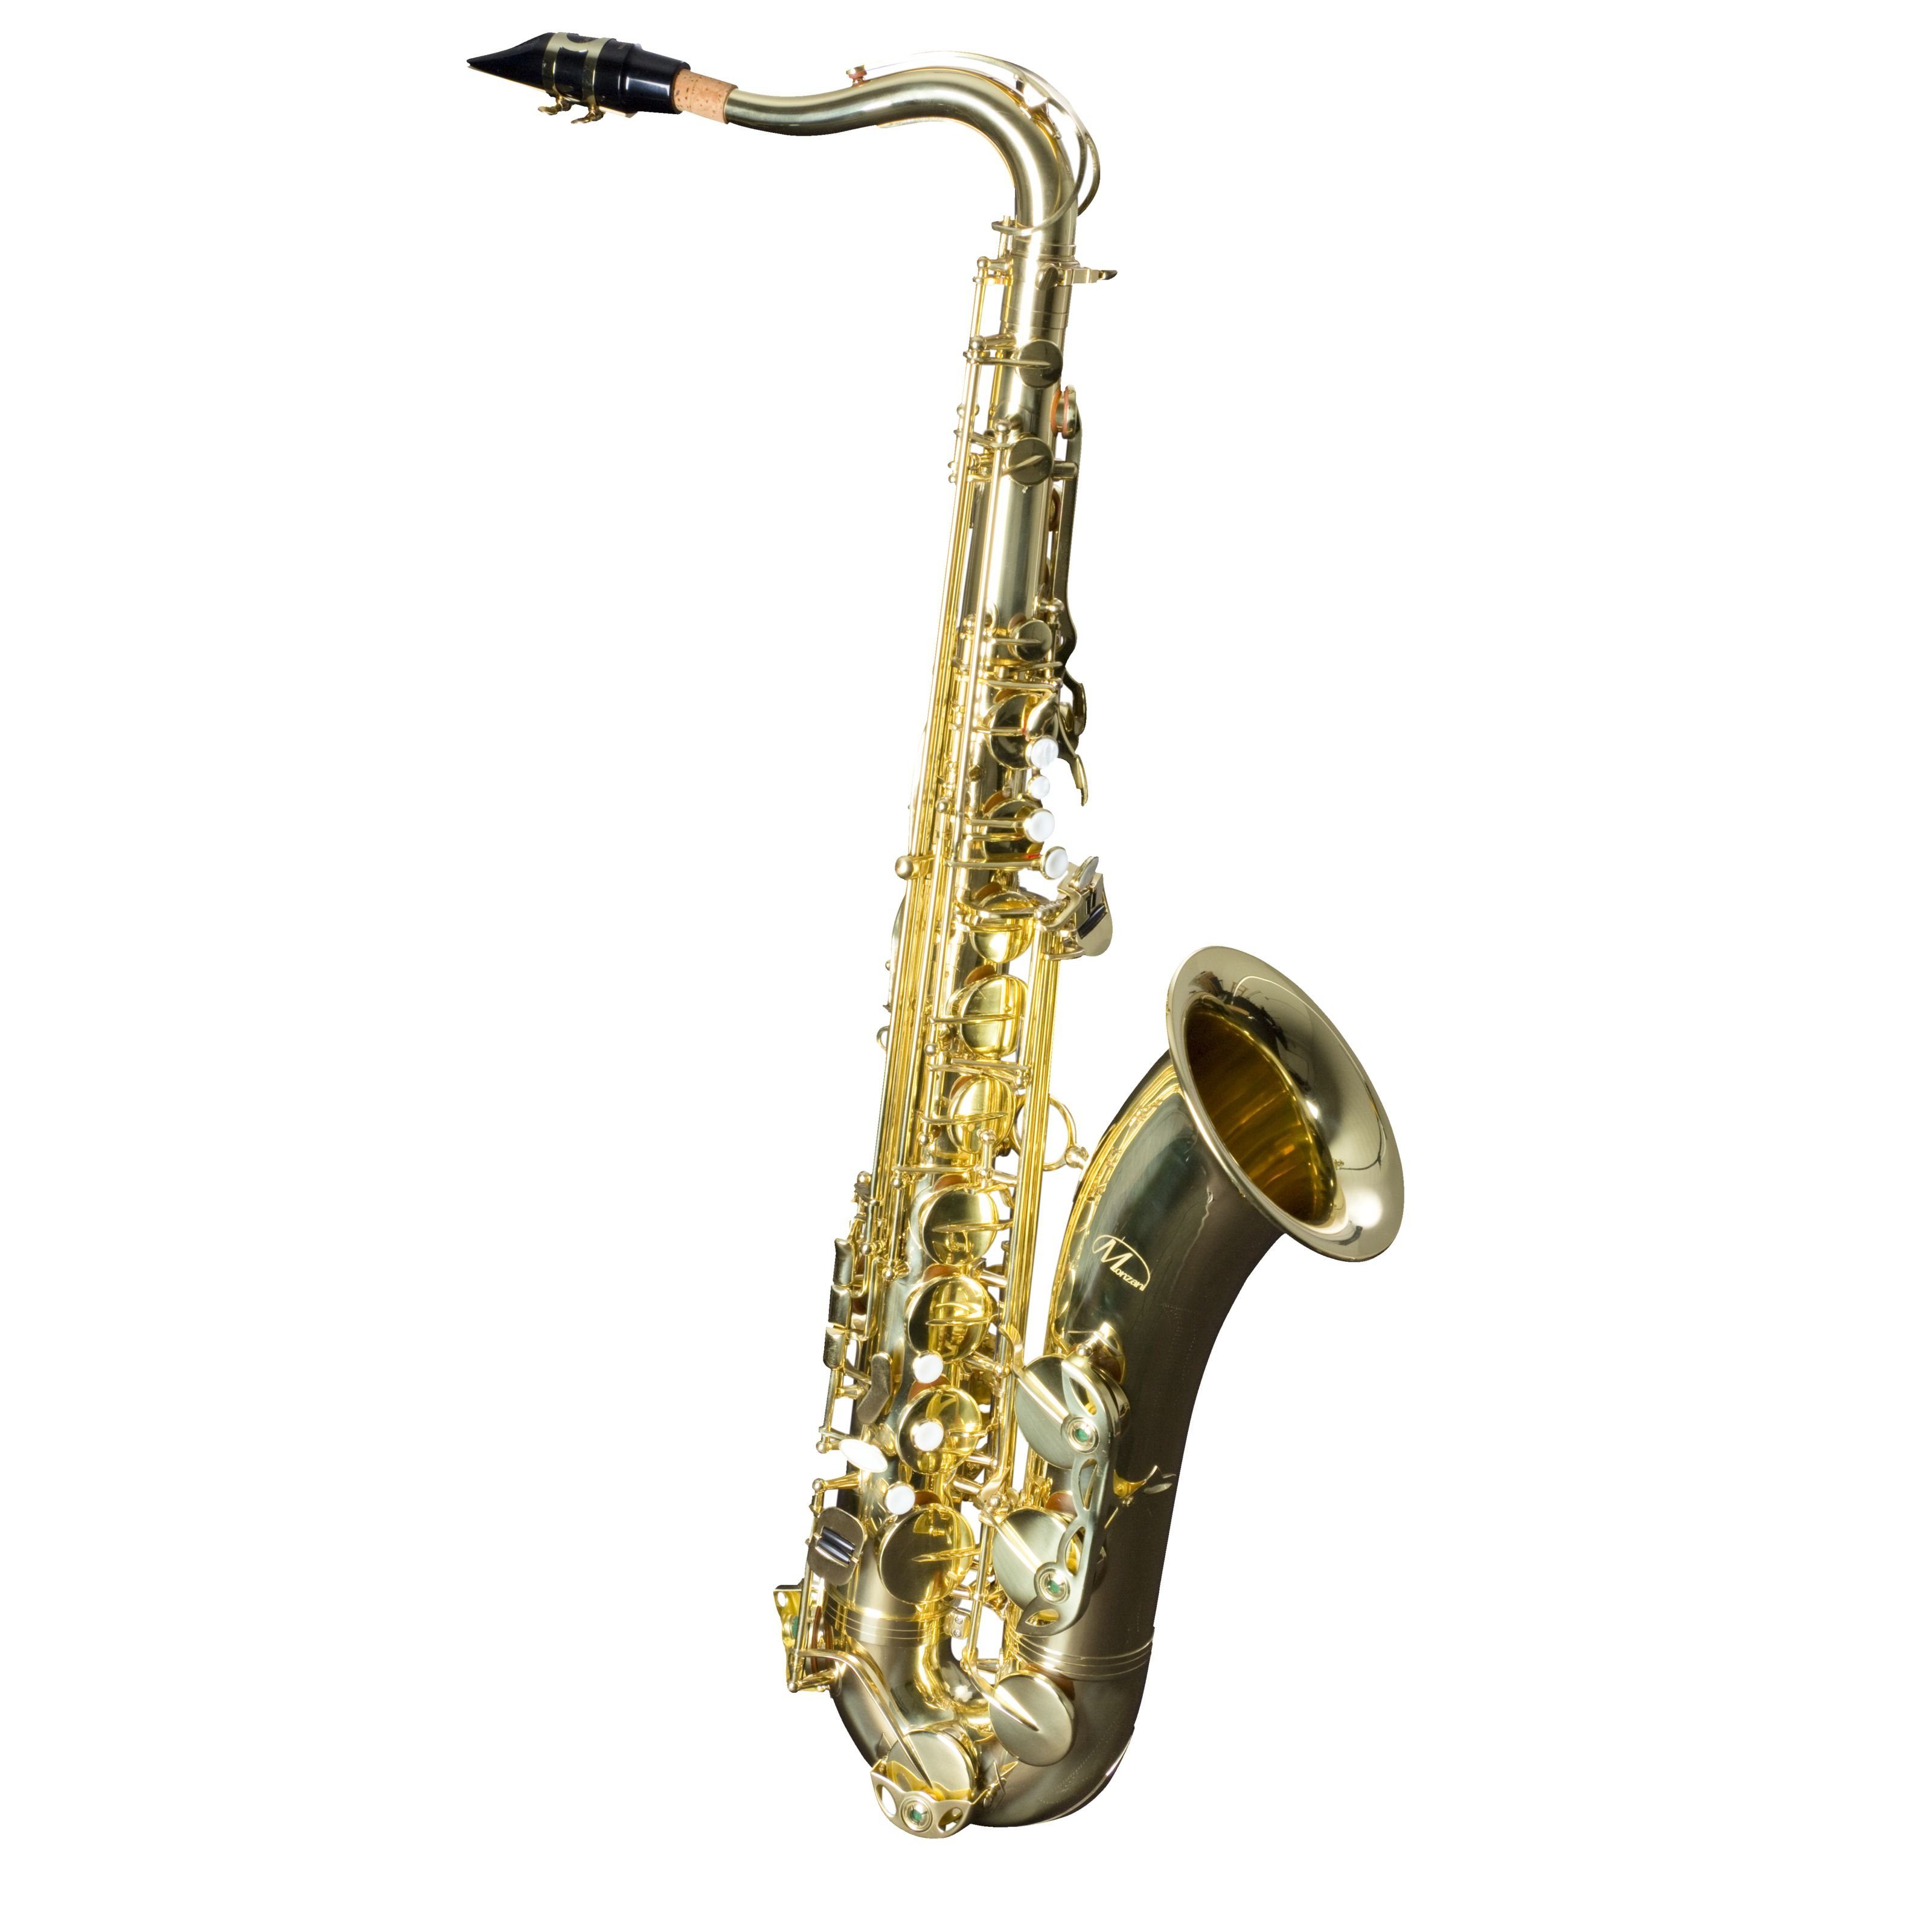 Monzani Saxophon, MZTS-100L Tenor Saxophon, Bb Stimmung, Messing Korpus, Klarlack lackiert, inklusive Mundstück und Tragegurt, Gravur Design, Ideal für Einsteiger, Tenor Saxophon, Bb Stimmung, Messing Korpus